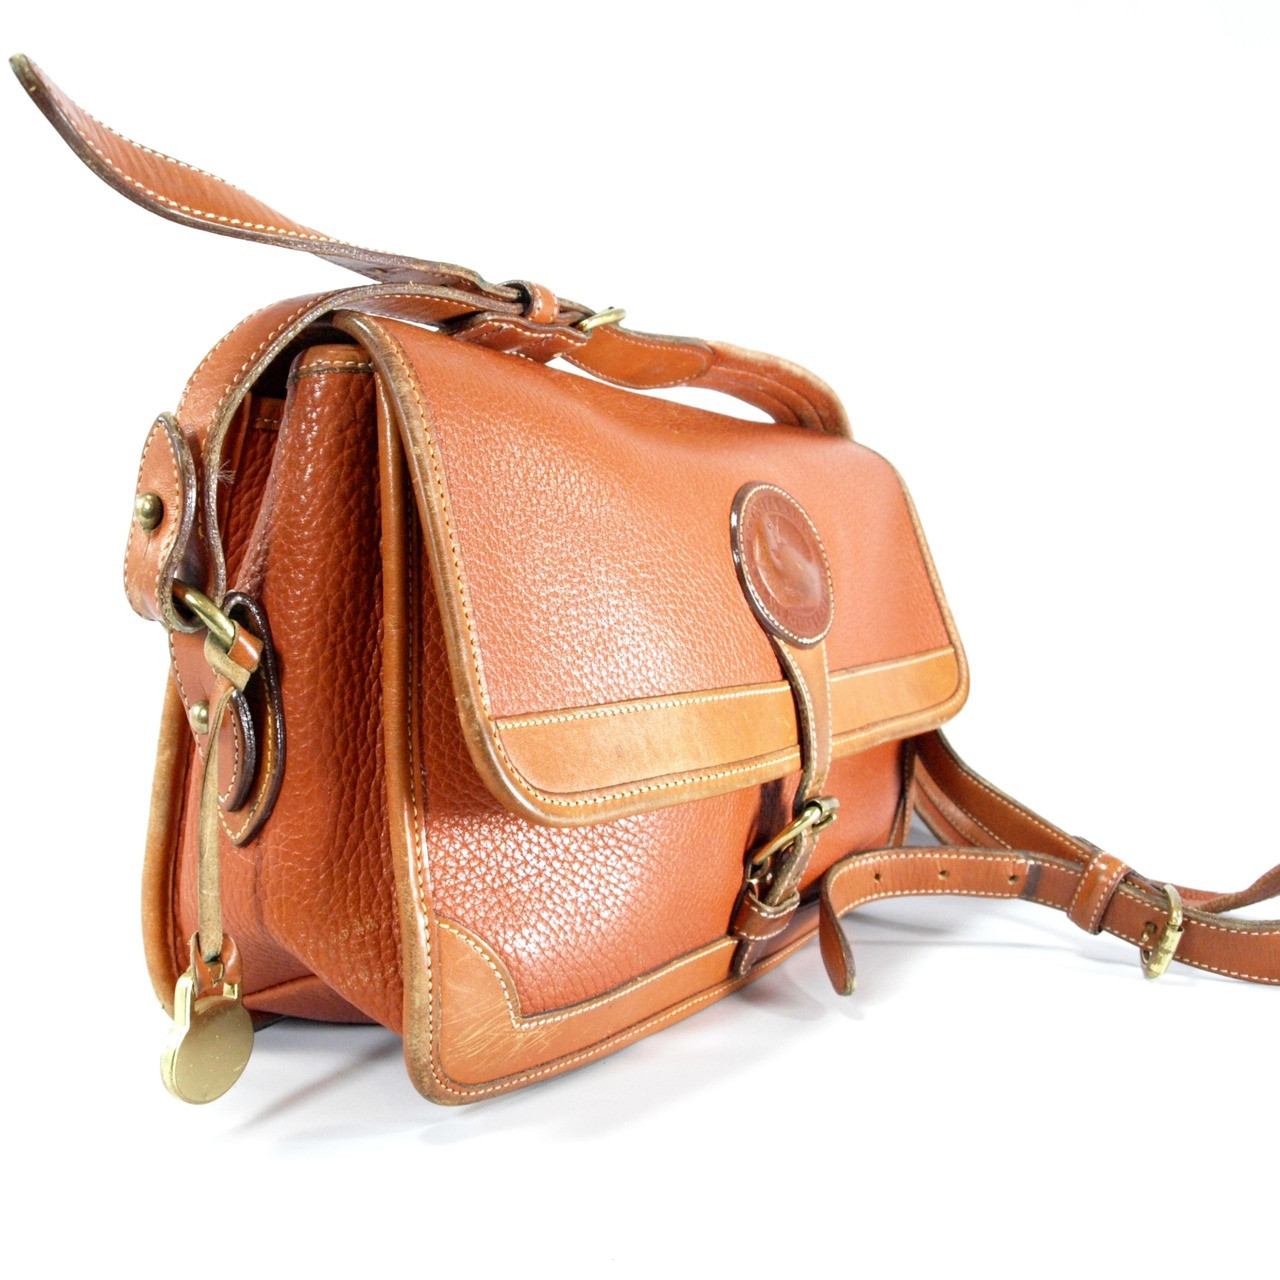 Vintage Dooney Bourke leather purse handbag - clothing